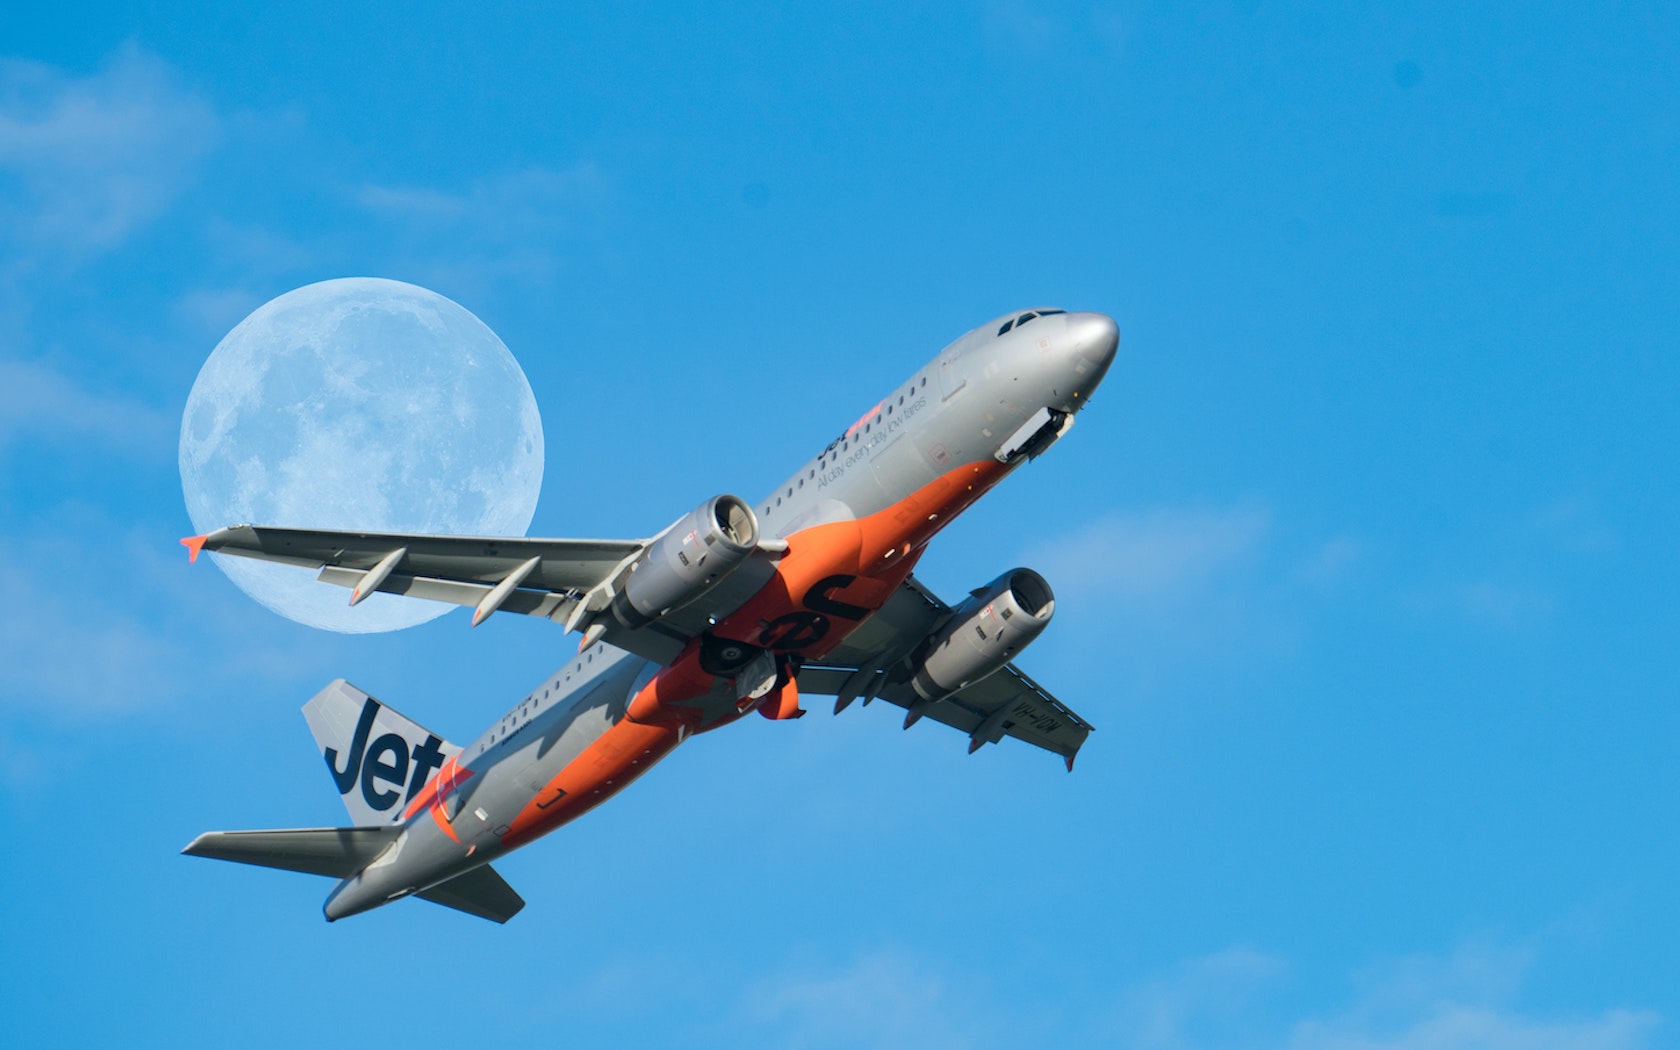 Jetstar Flights: Fly From Sydney To Melbourne For $19 After Coronavirus